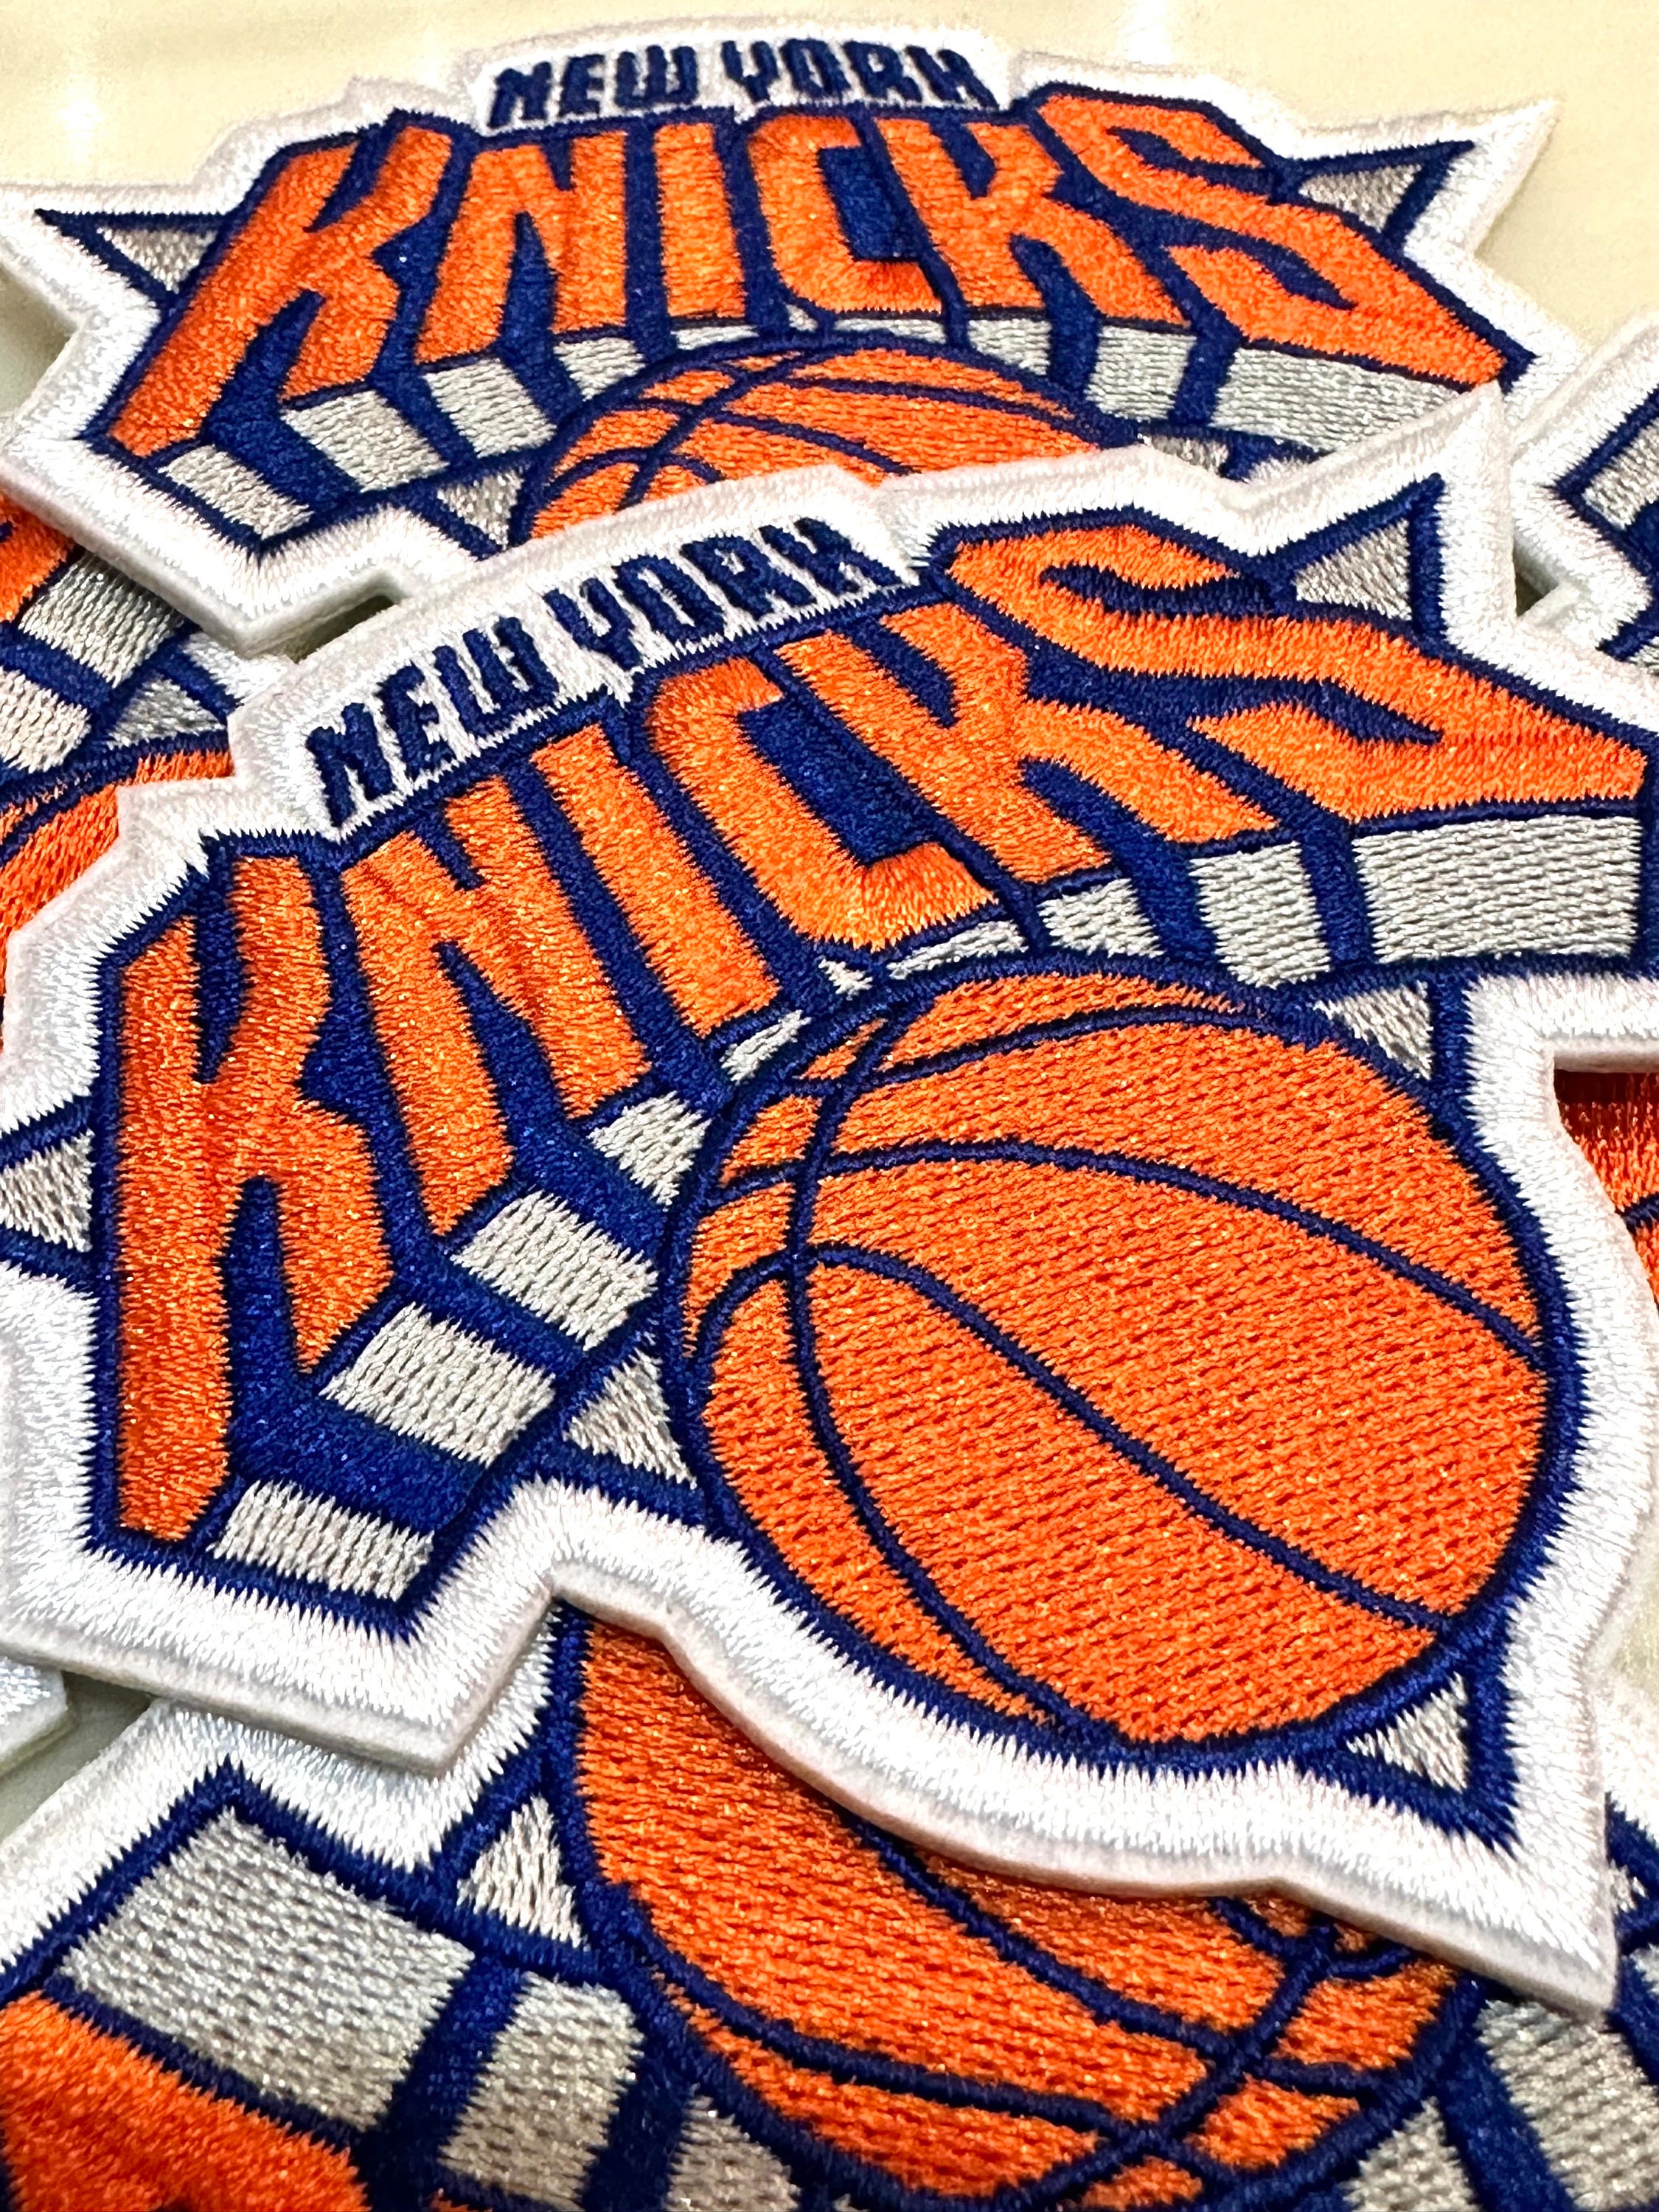 New York Knicks Cotton Fabric Patch by Joann